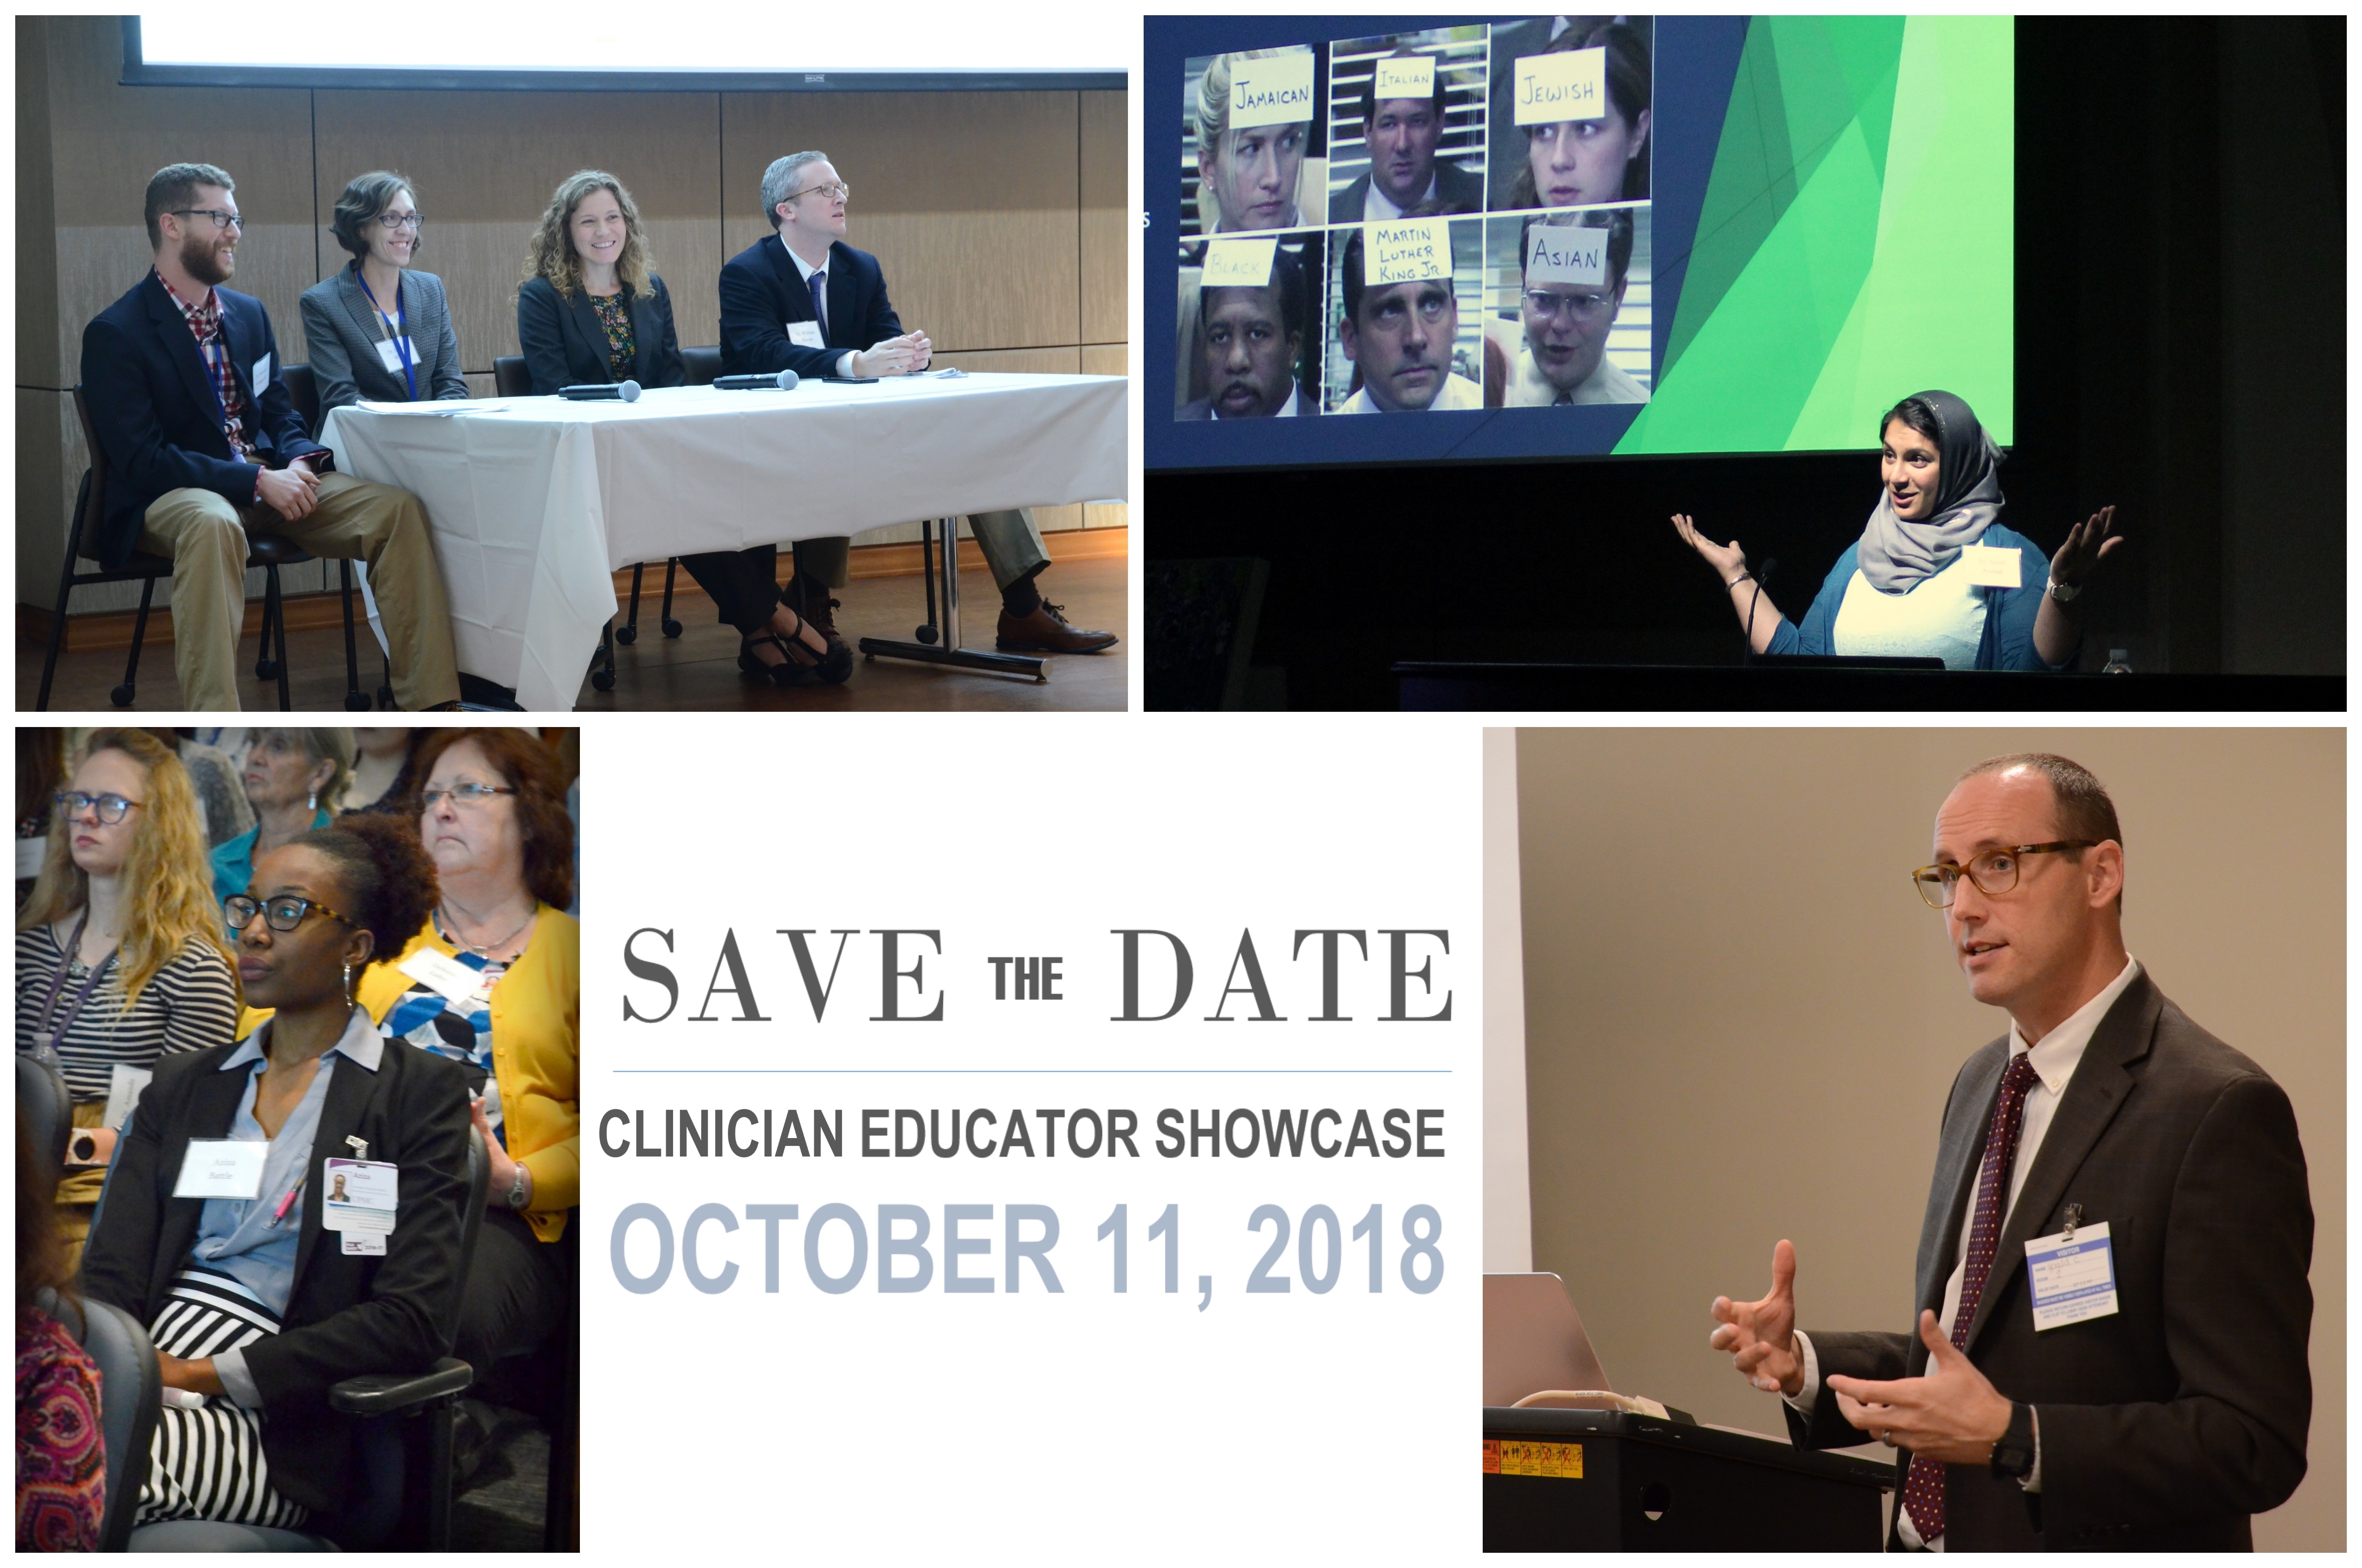 2018 Clinician Educator Showcase Save the Date